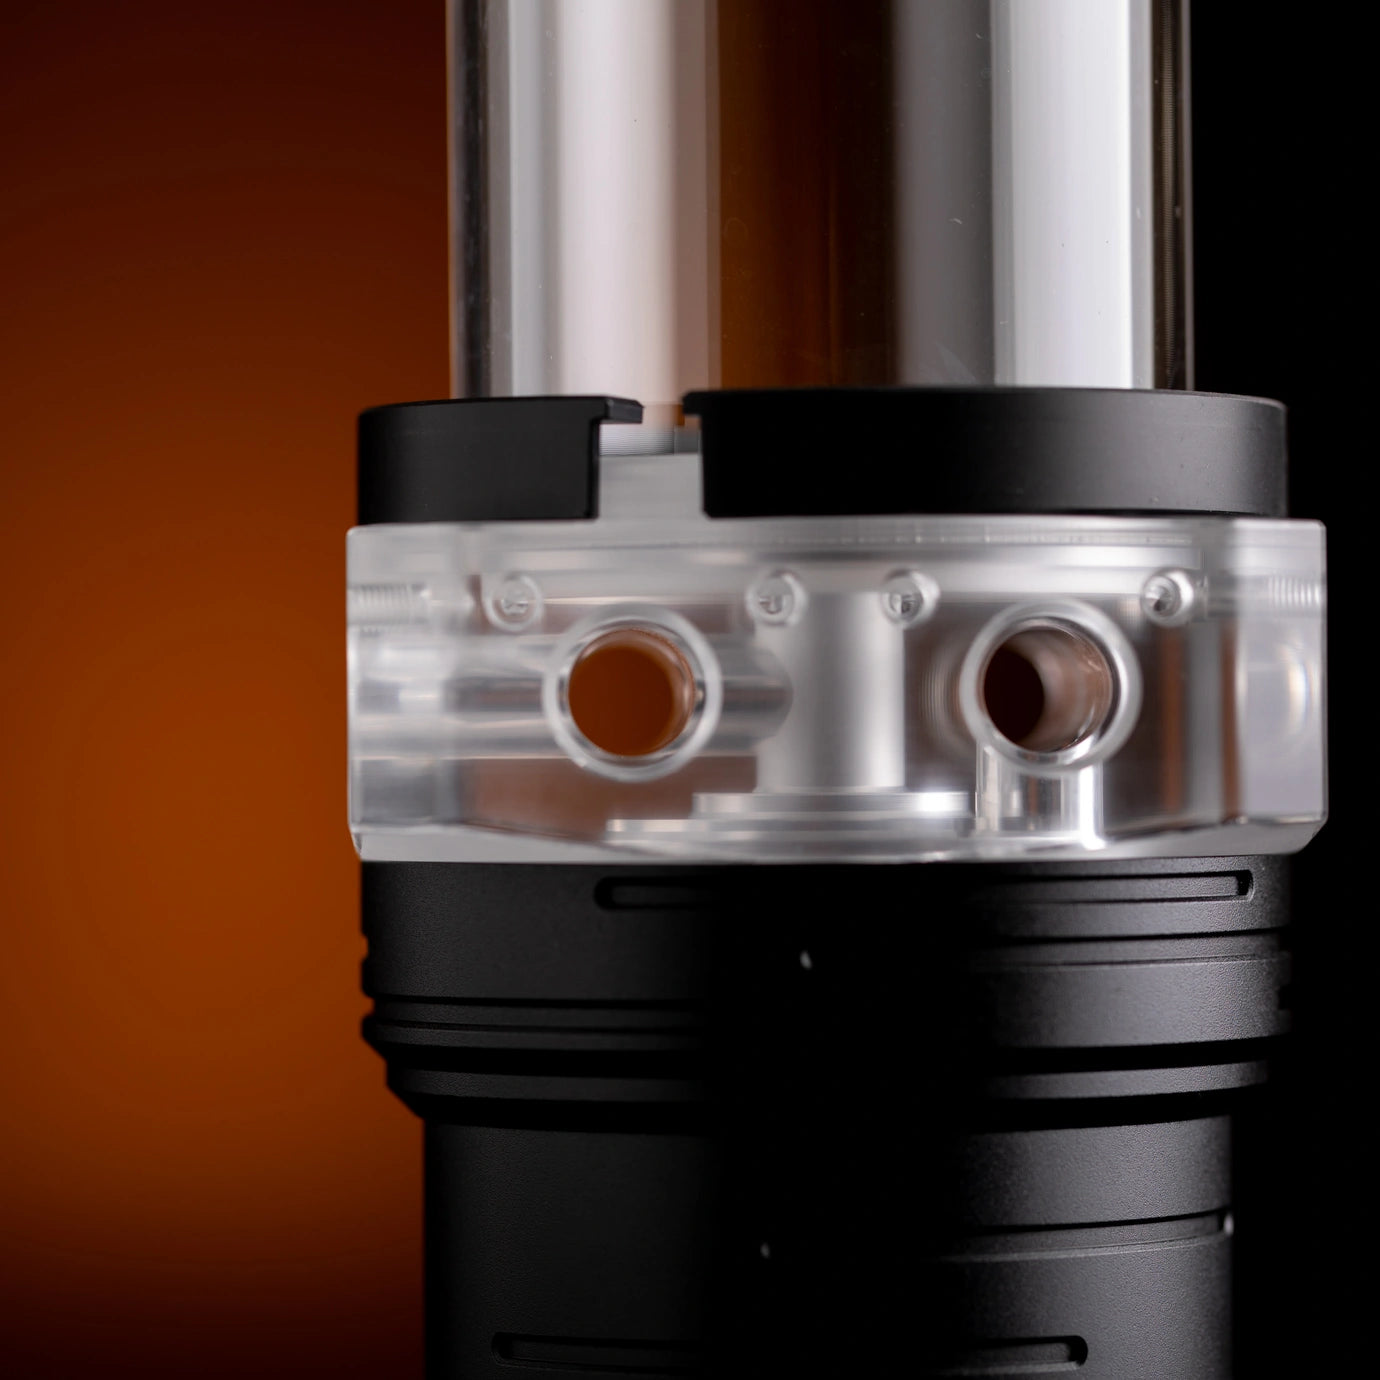 Singularity Computers Protium 3.0 ARGB 150 D5 Reservoir - Acrylic Black Ordinary Cooling Gear Australia